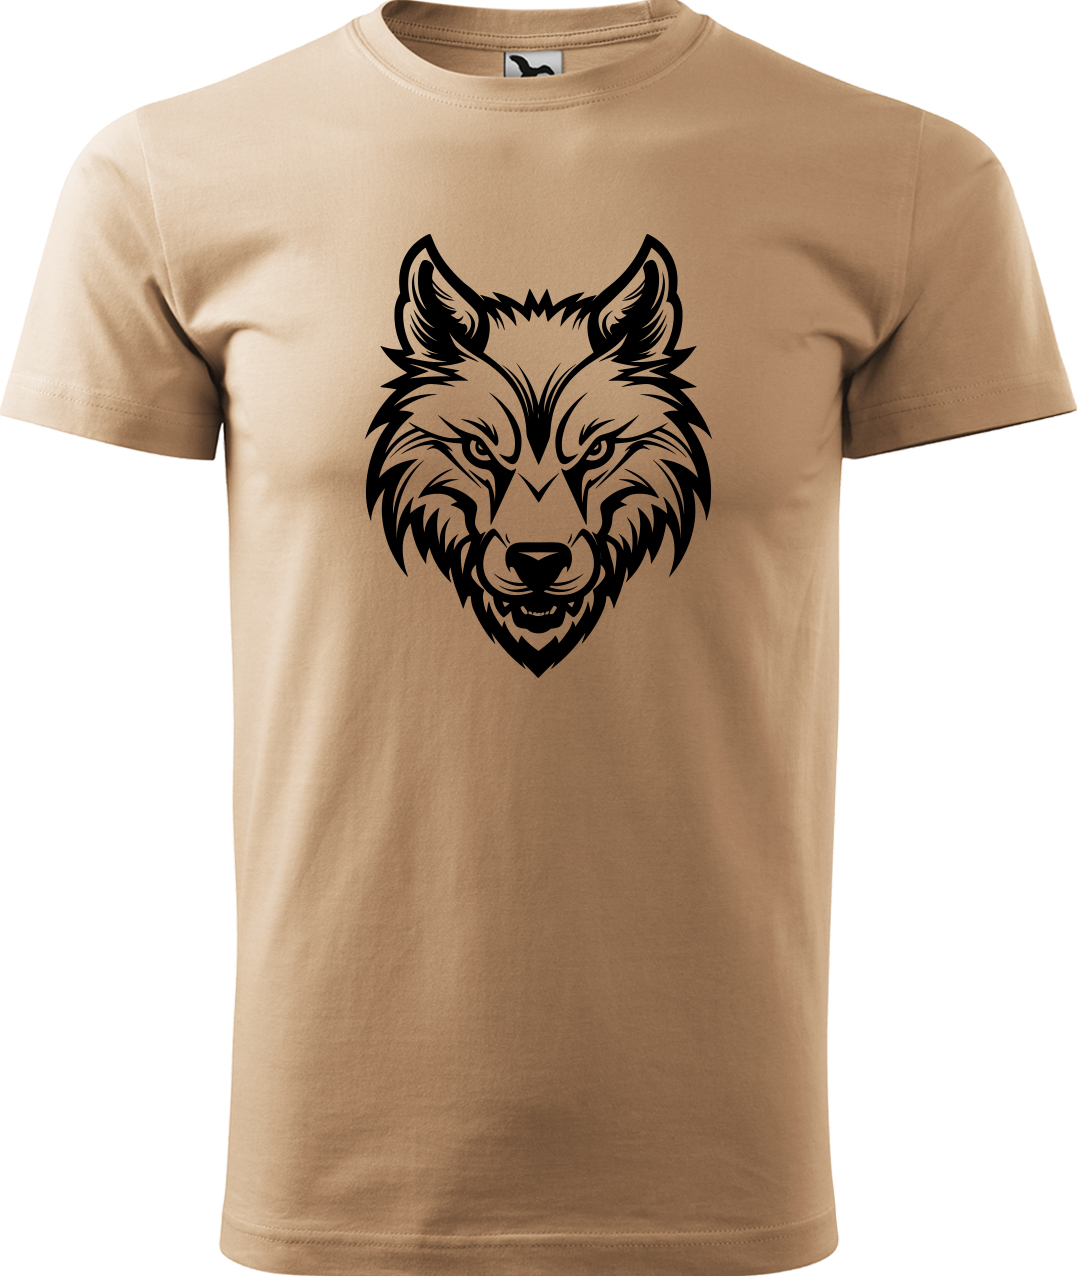 Pánské tričko s vlkem - Alfa samec Velikost: M, Barva: Písková (08), Střih: pánský